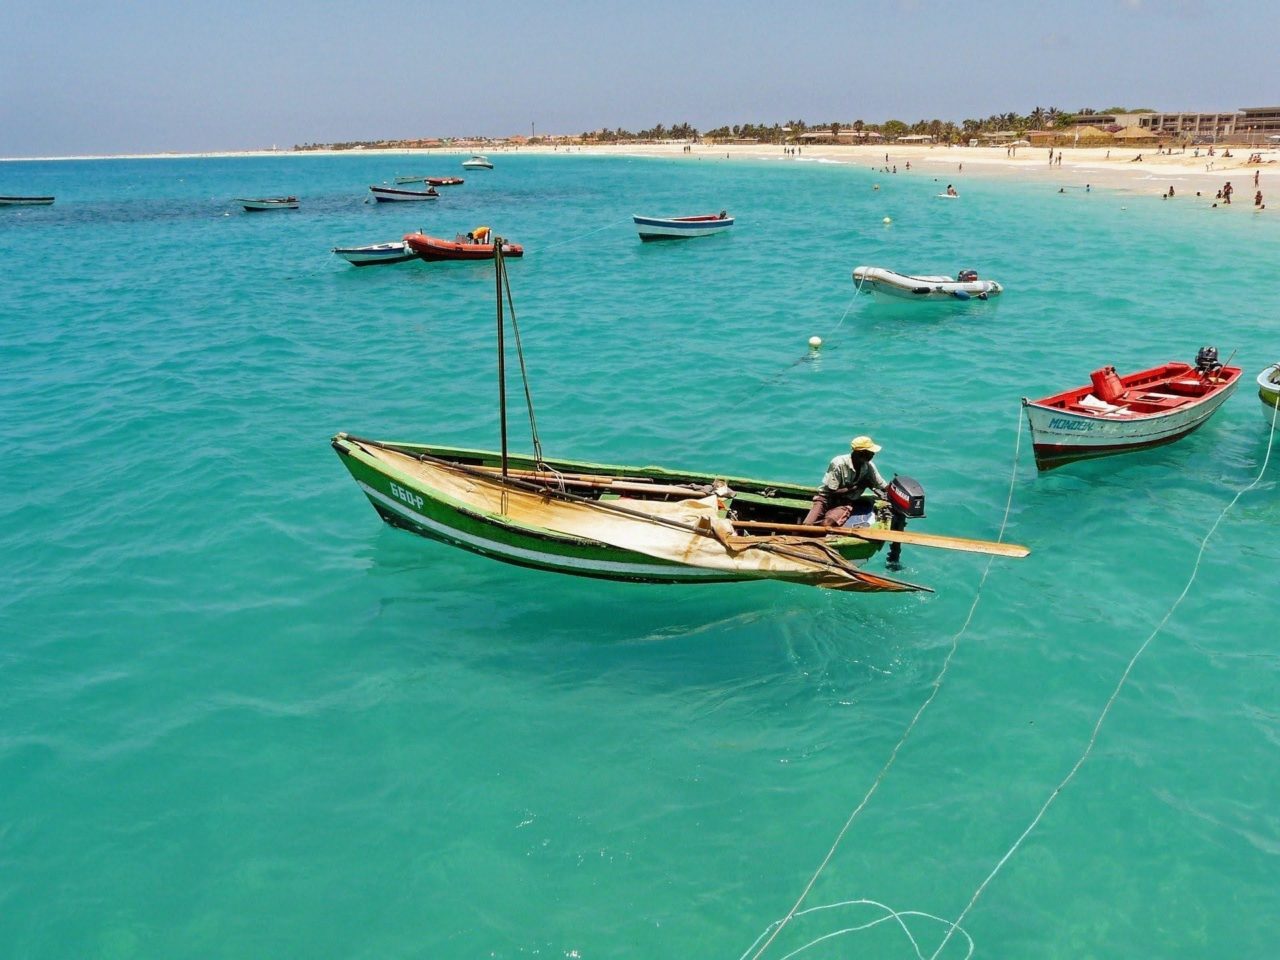 Kadealo Africa Cape Verde Iiha Do Sal - Astonishingly Beautiful African Islands to Visit